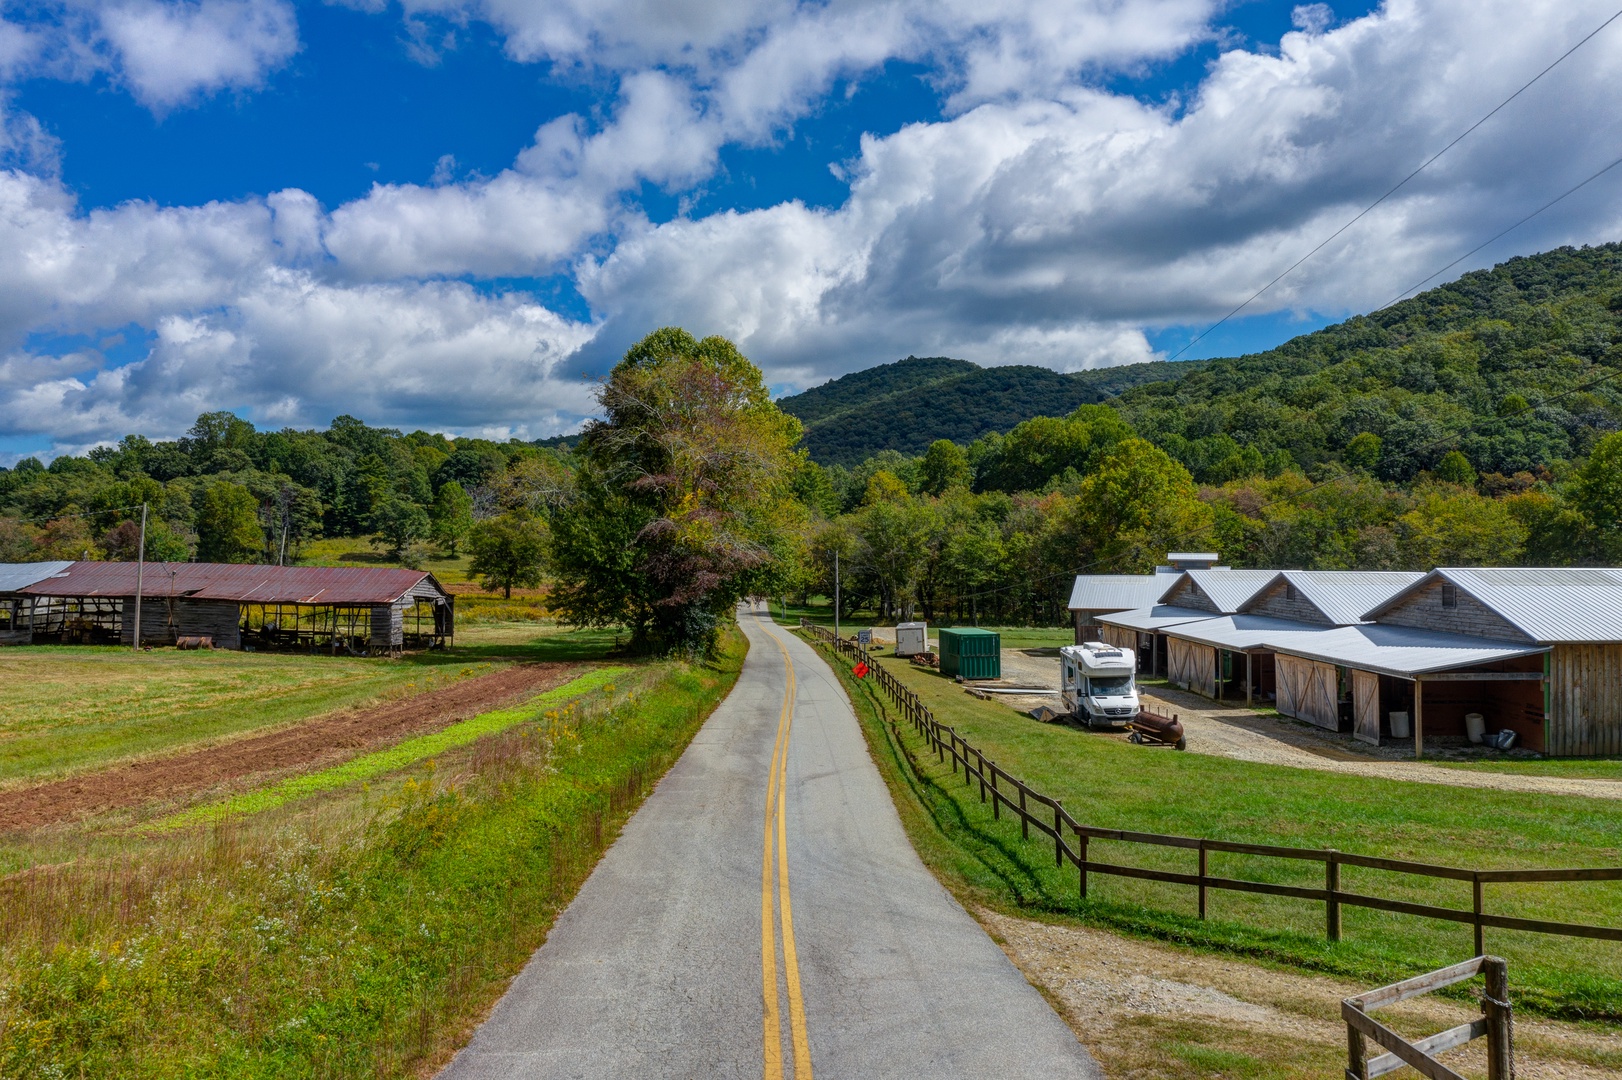 Take a stroll down this enchanting North Georgia Mountain road